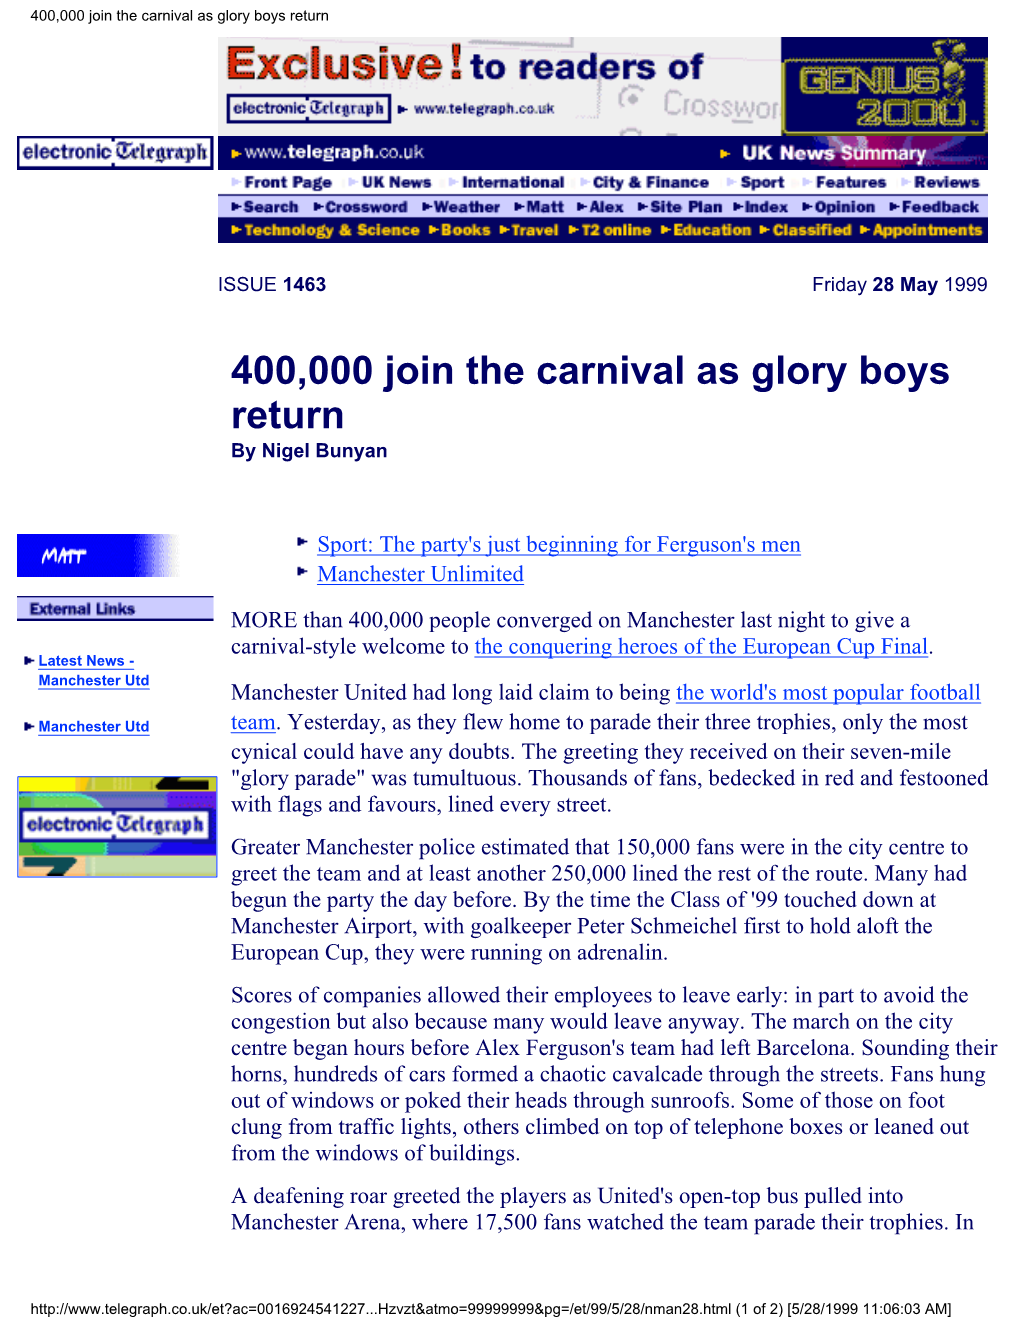 400000 Join the Carnival As Glory Boys Return